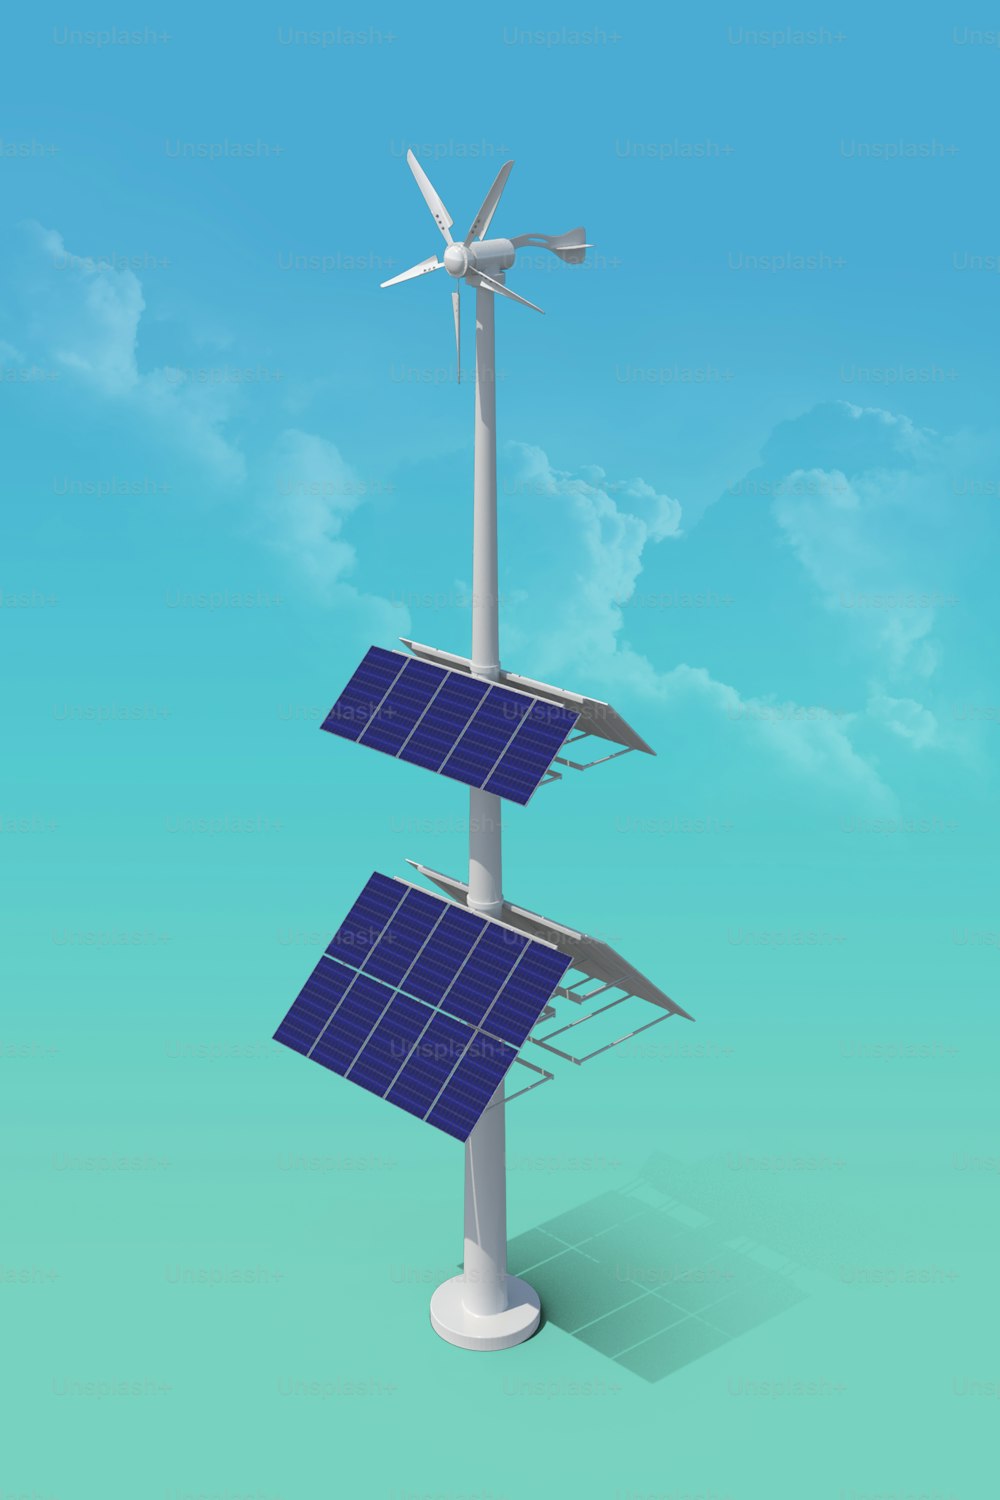 a wind turbine and a solar panel on a pole